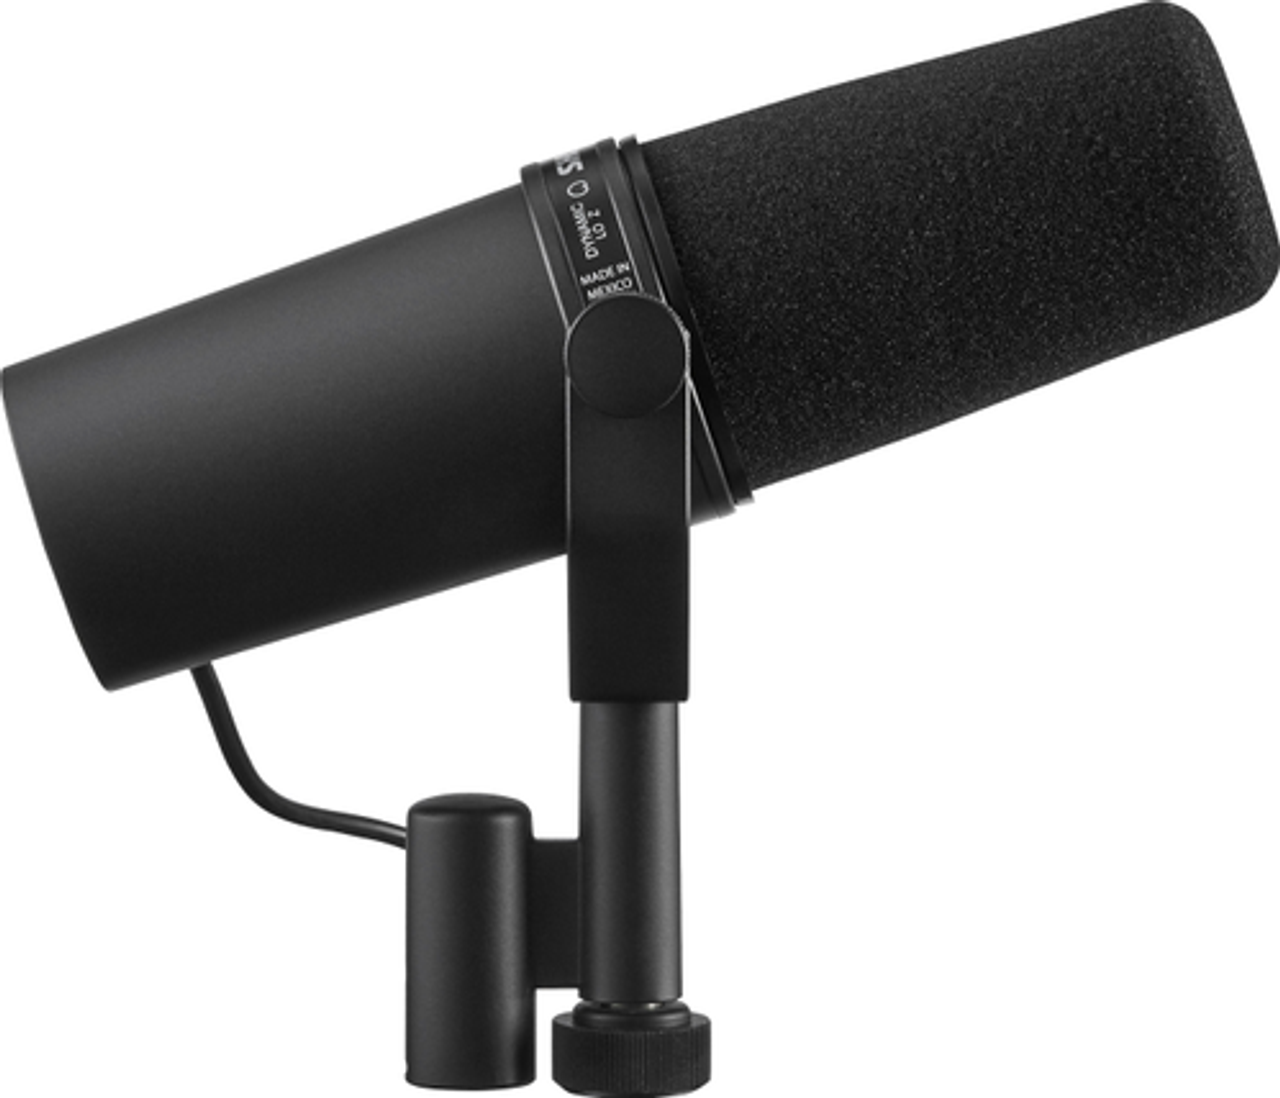 Shure SM7B Dynamic Vocal Microphone